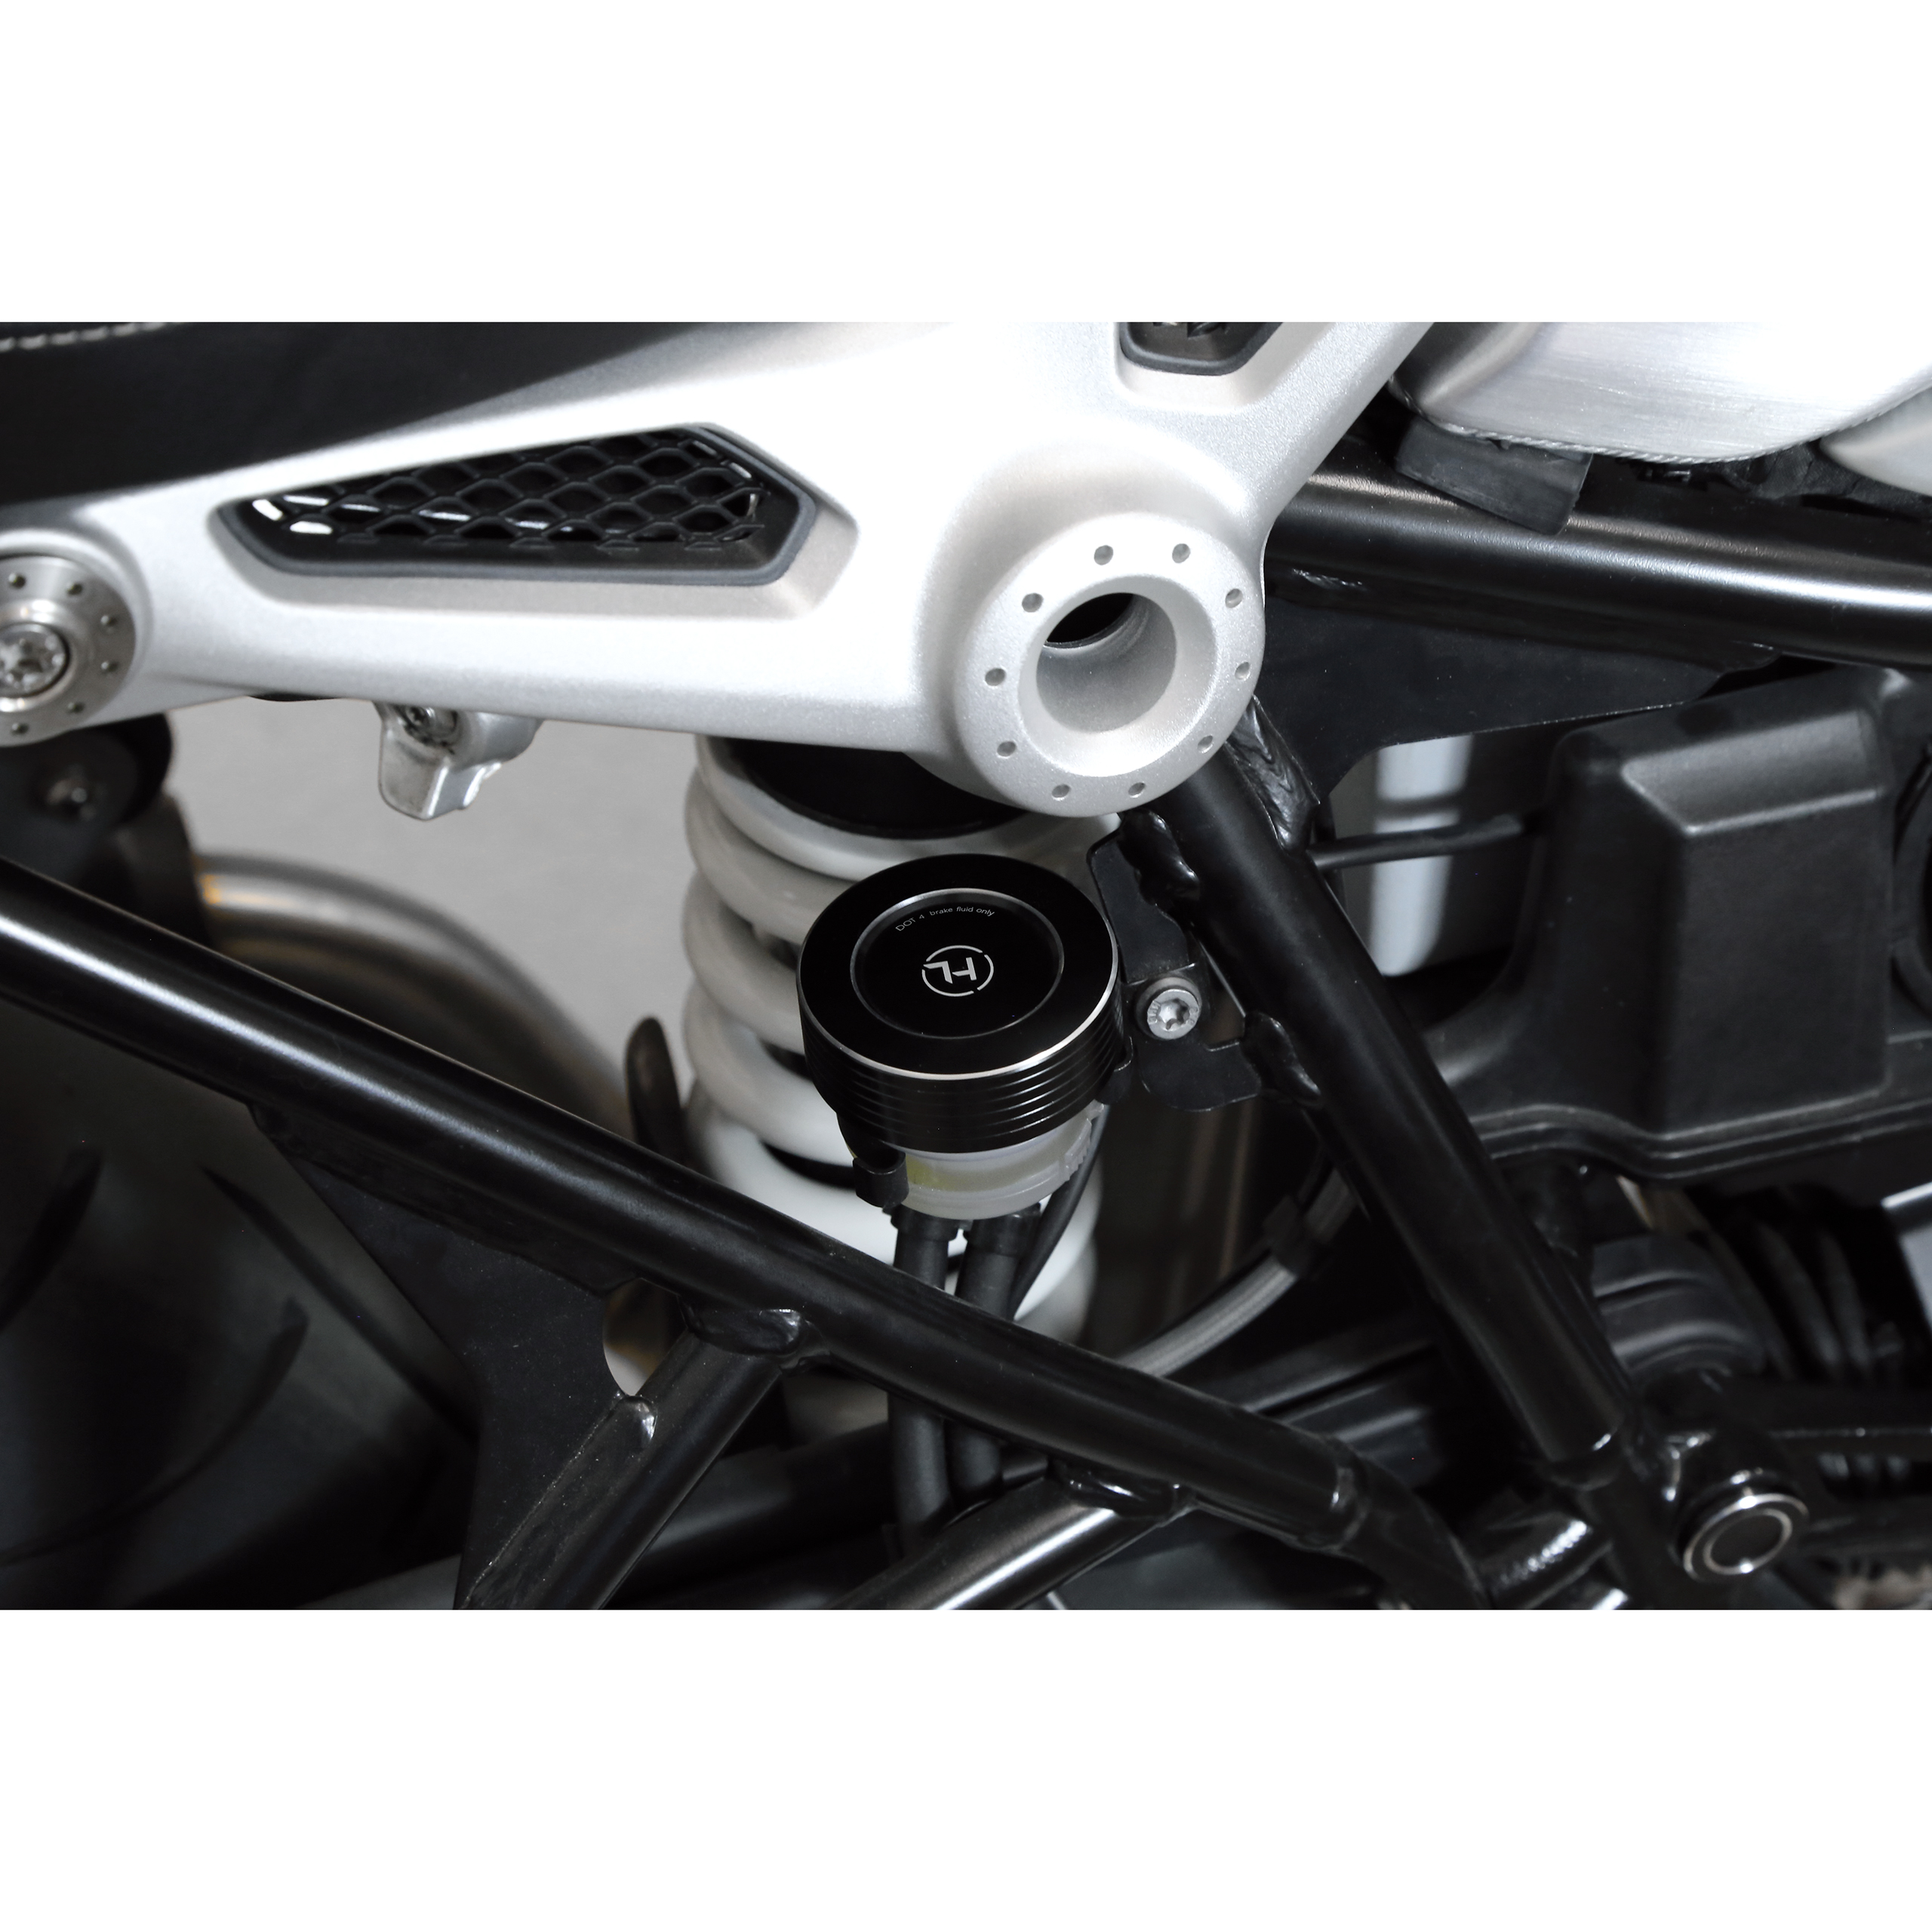 HIGHSIDER CNC Alu support phare BOTTOM TYPE1, noir [220-220] - €49.95 : La  boutique moto en ligne, Quality Motorbike Parts